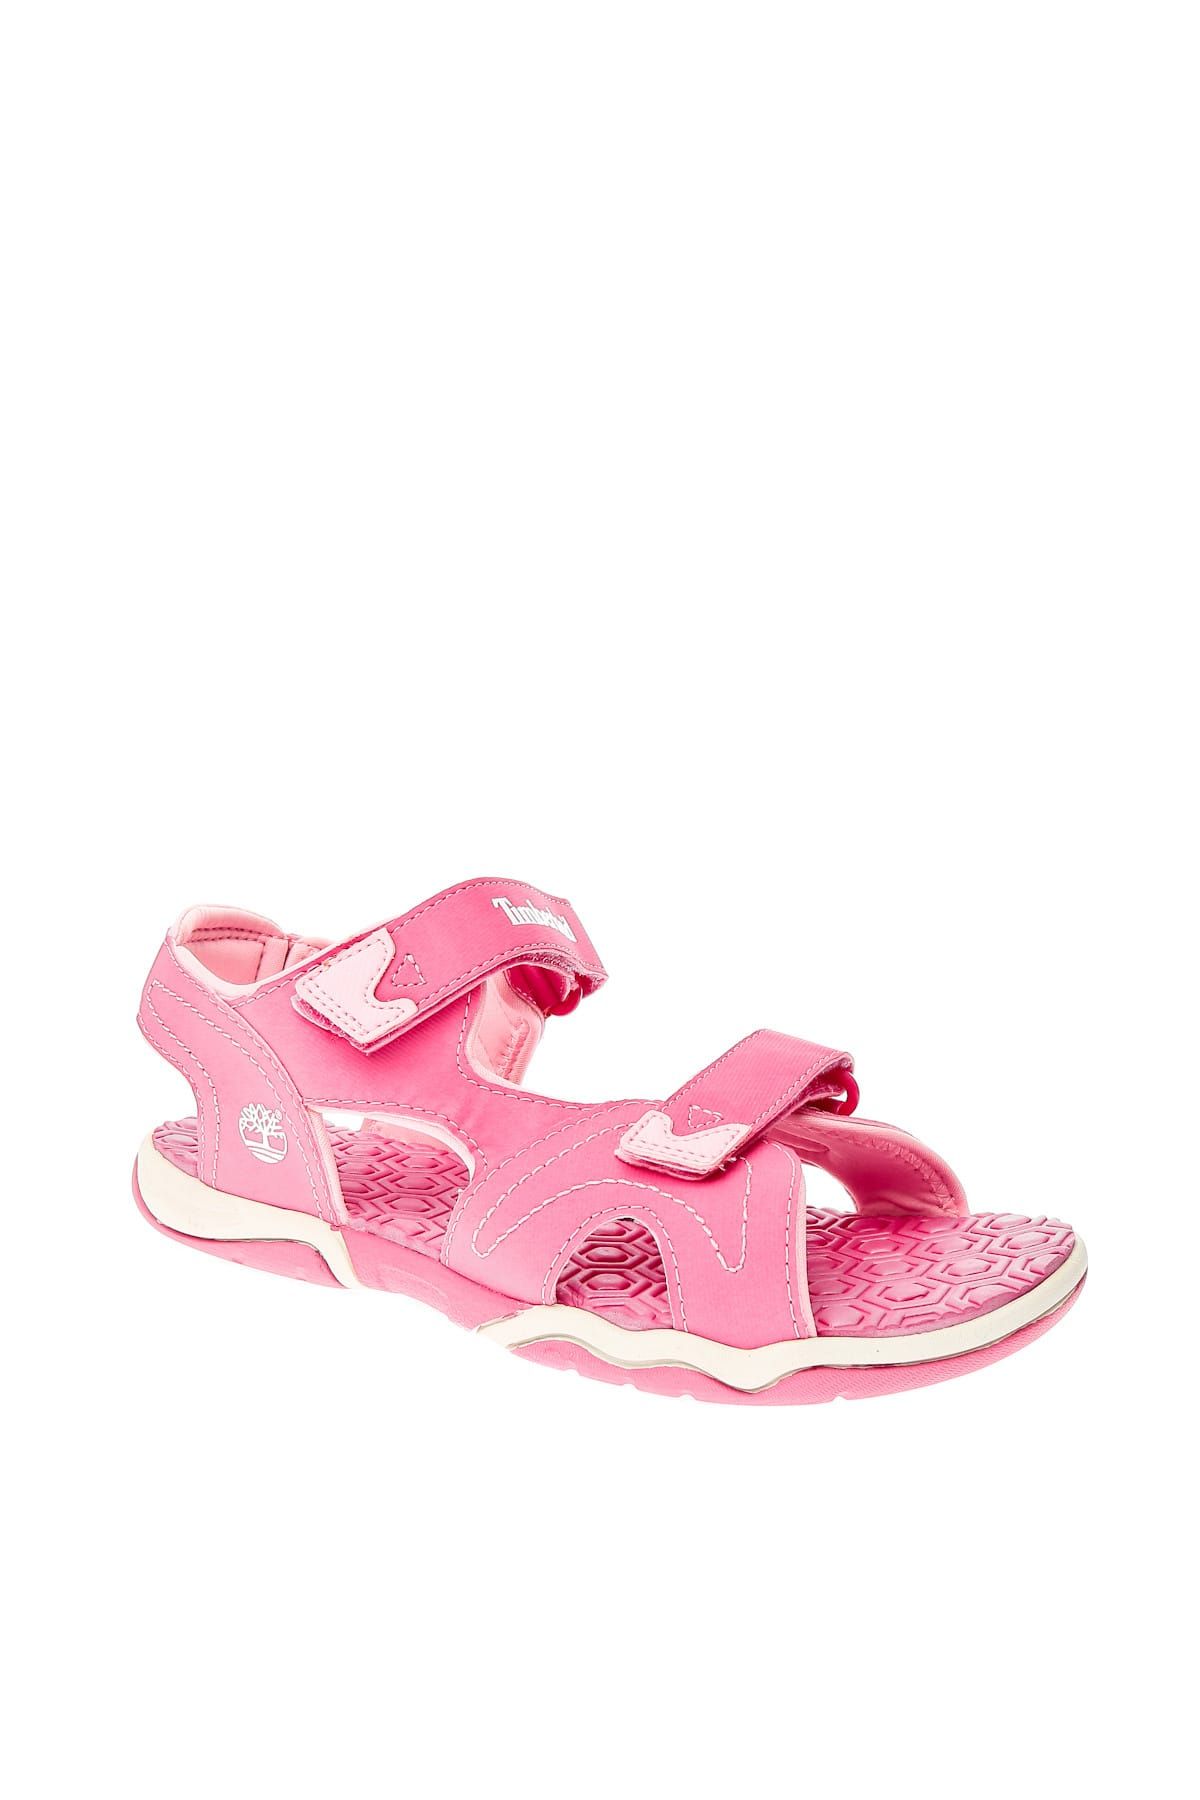 Timberland Pınk Kız Çocuk Sandalet 1TIK20154120